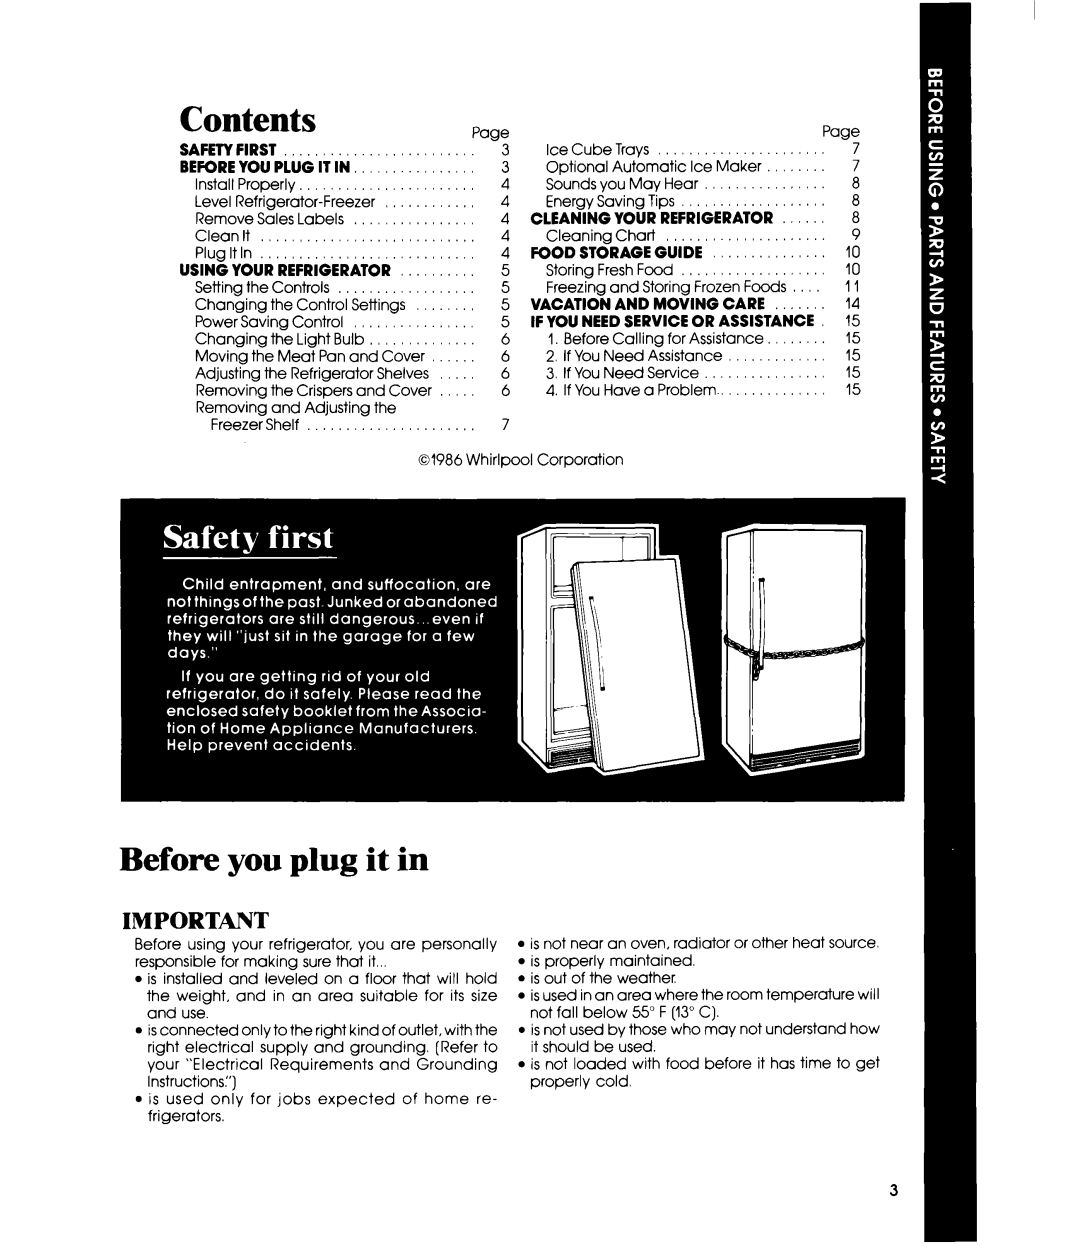 Whirlpool ET18MK manual Before you plug it in, SAFETYFIRST3 BEKREYOUPLUGITIN, Using Your Refrigerator, Food Storage Guide 